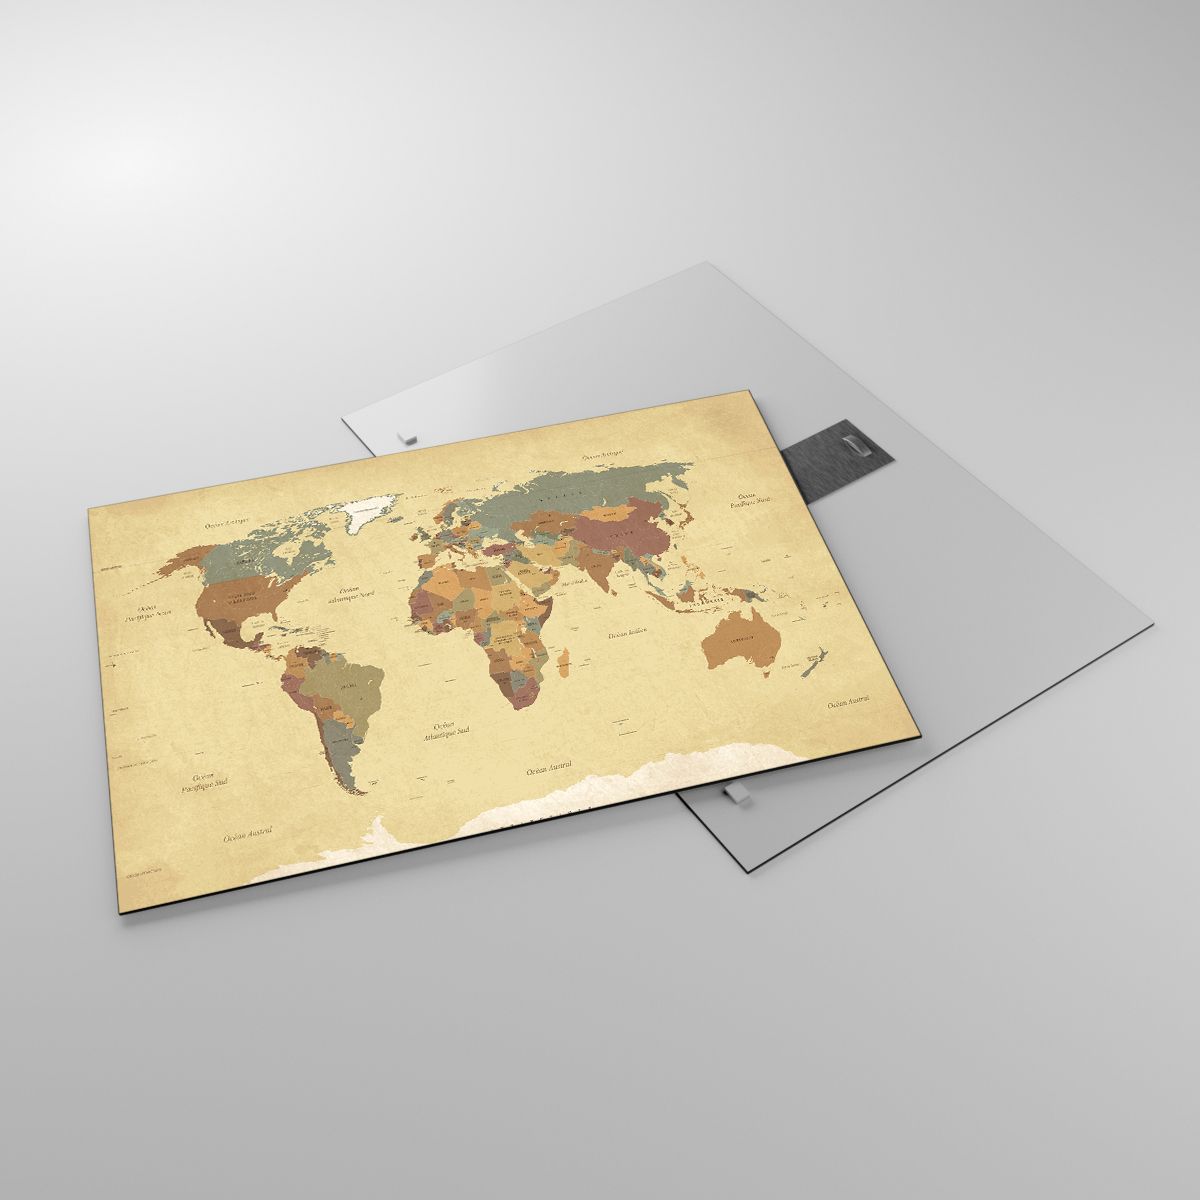 Glasbild Weltkarte, Glasbild Kontinente, Glasbild Reisen, Glasbild Grafik, Glasbild Jahrgang